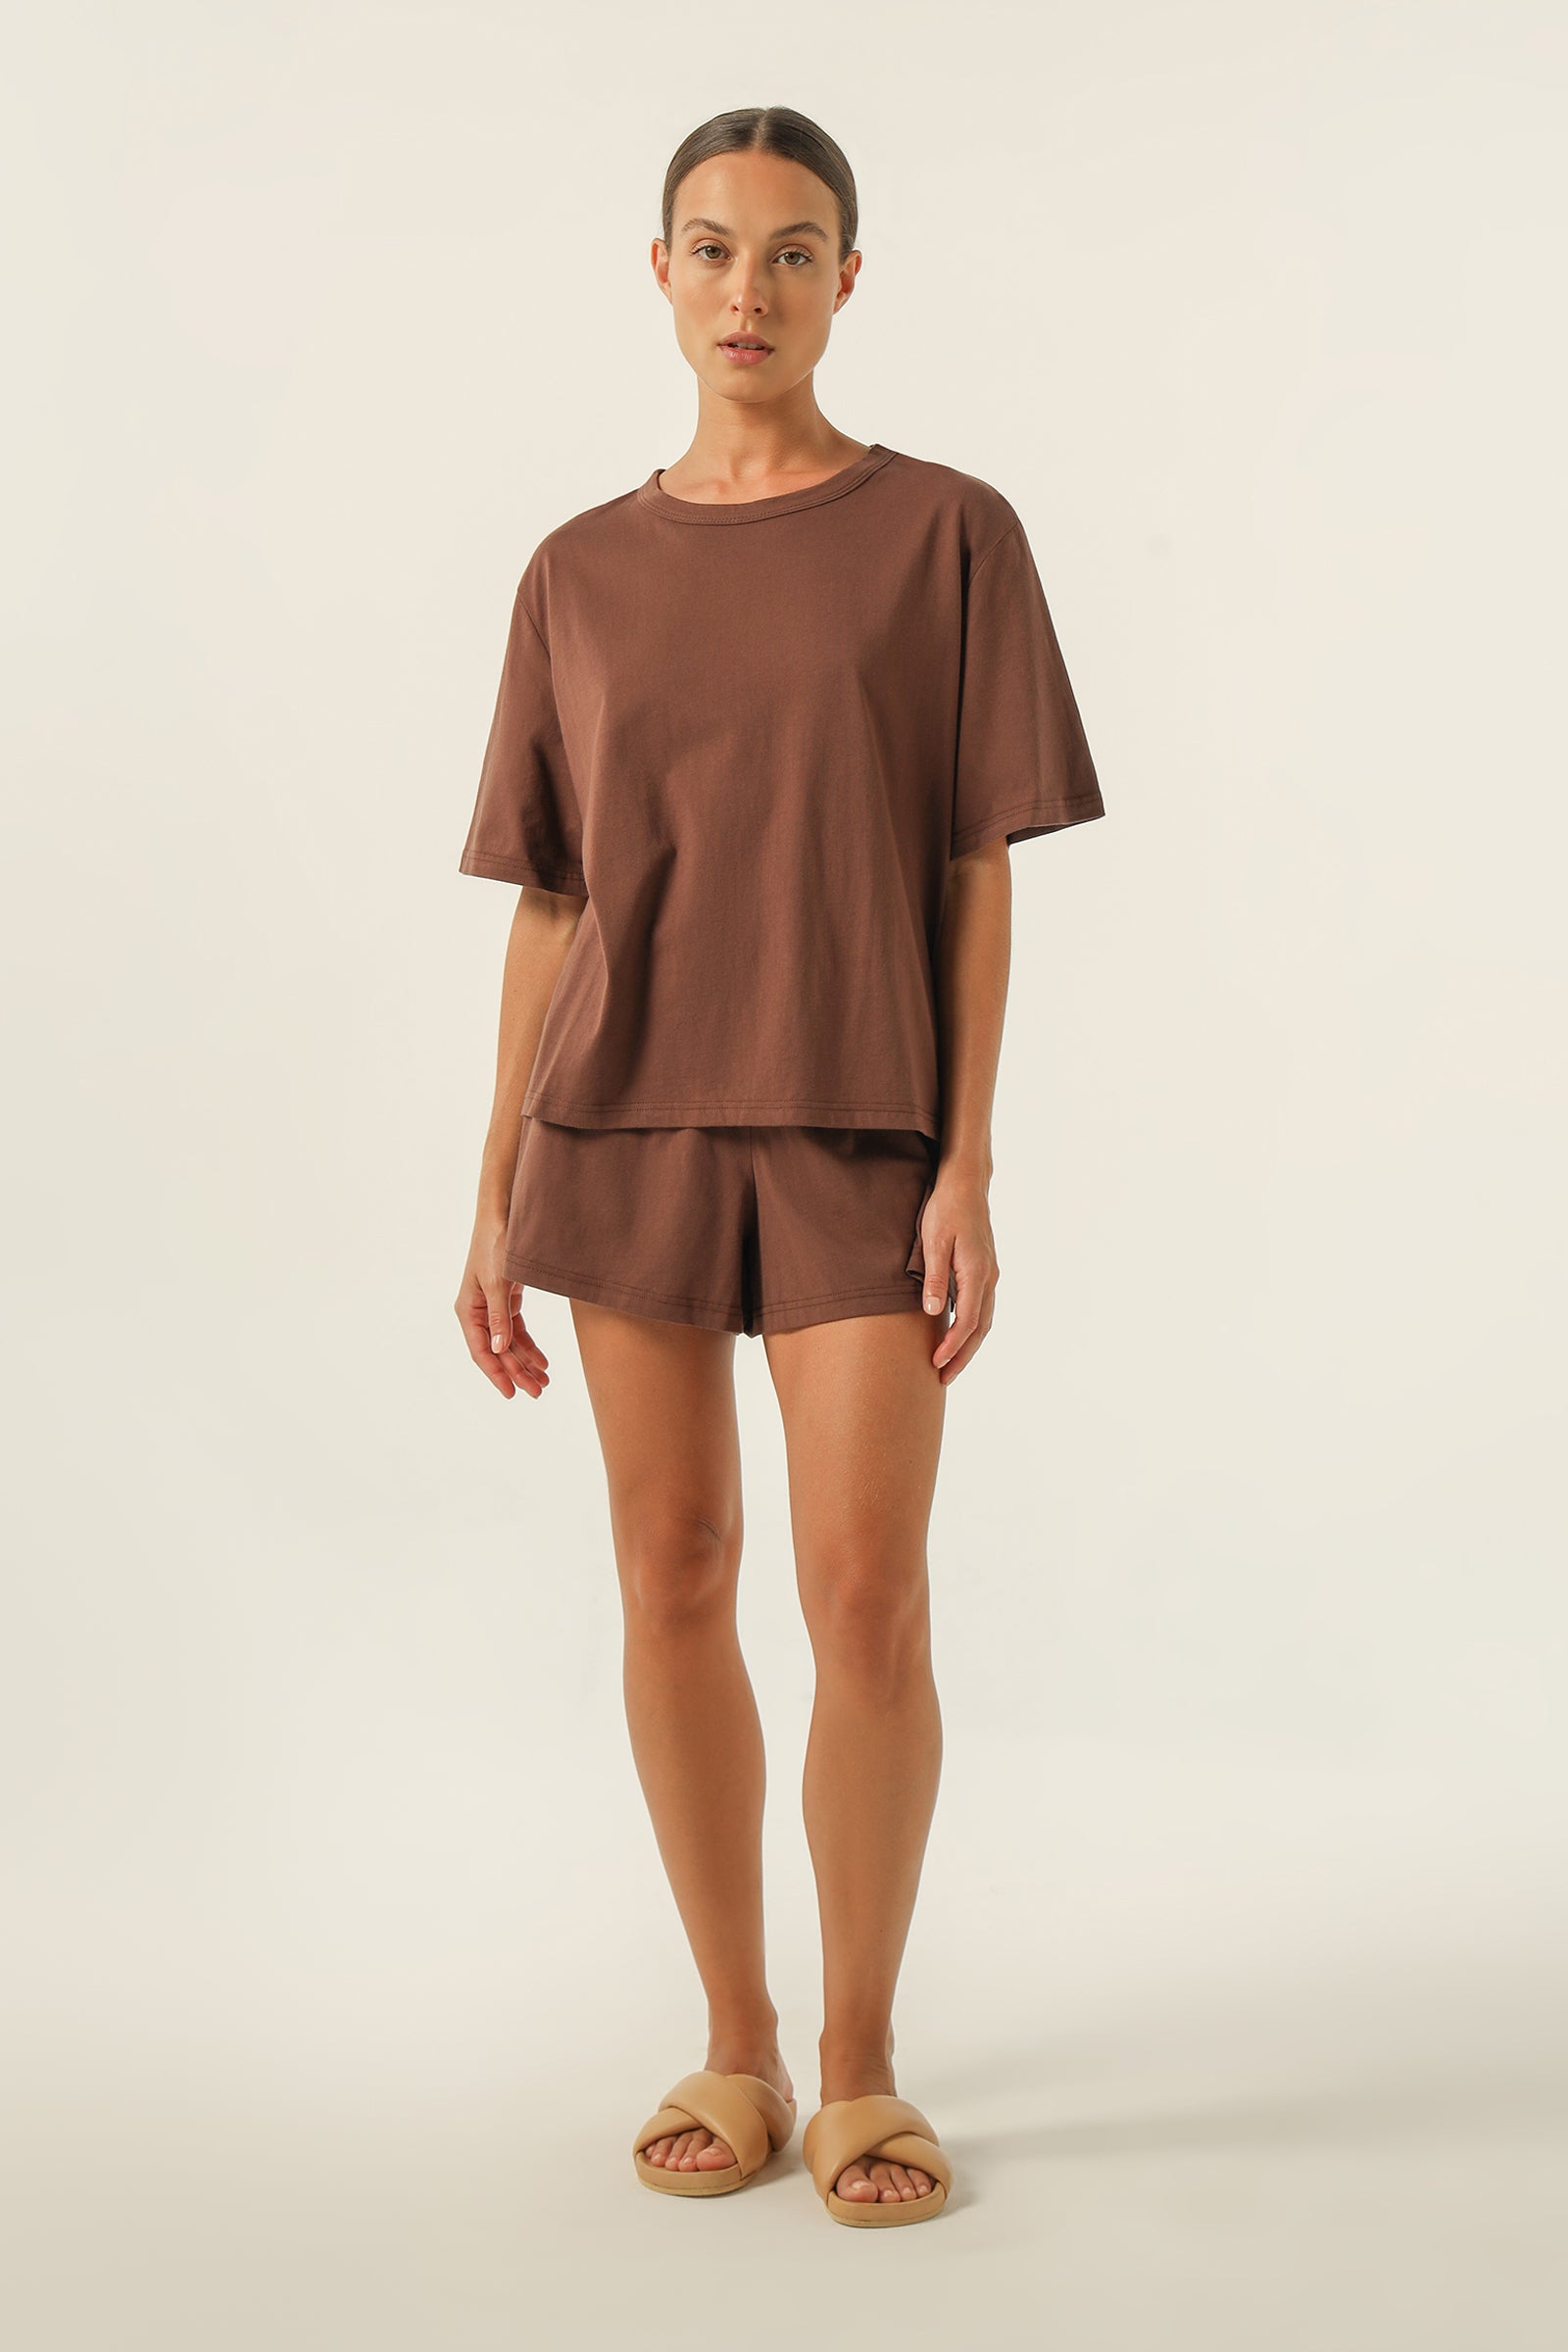 Nude Lucy Nude Lounge Jersey Short In a Brown Cedar Colour